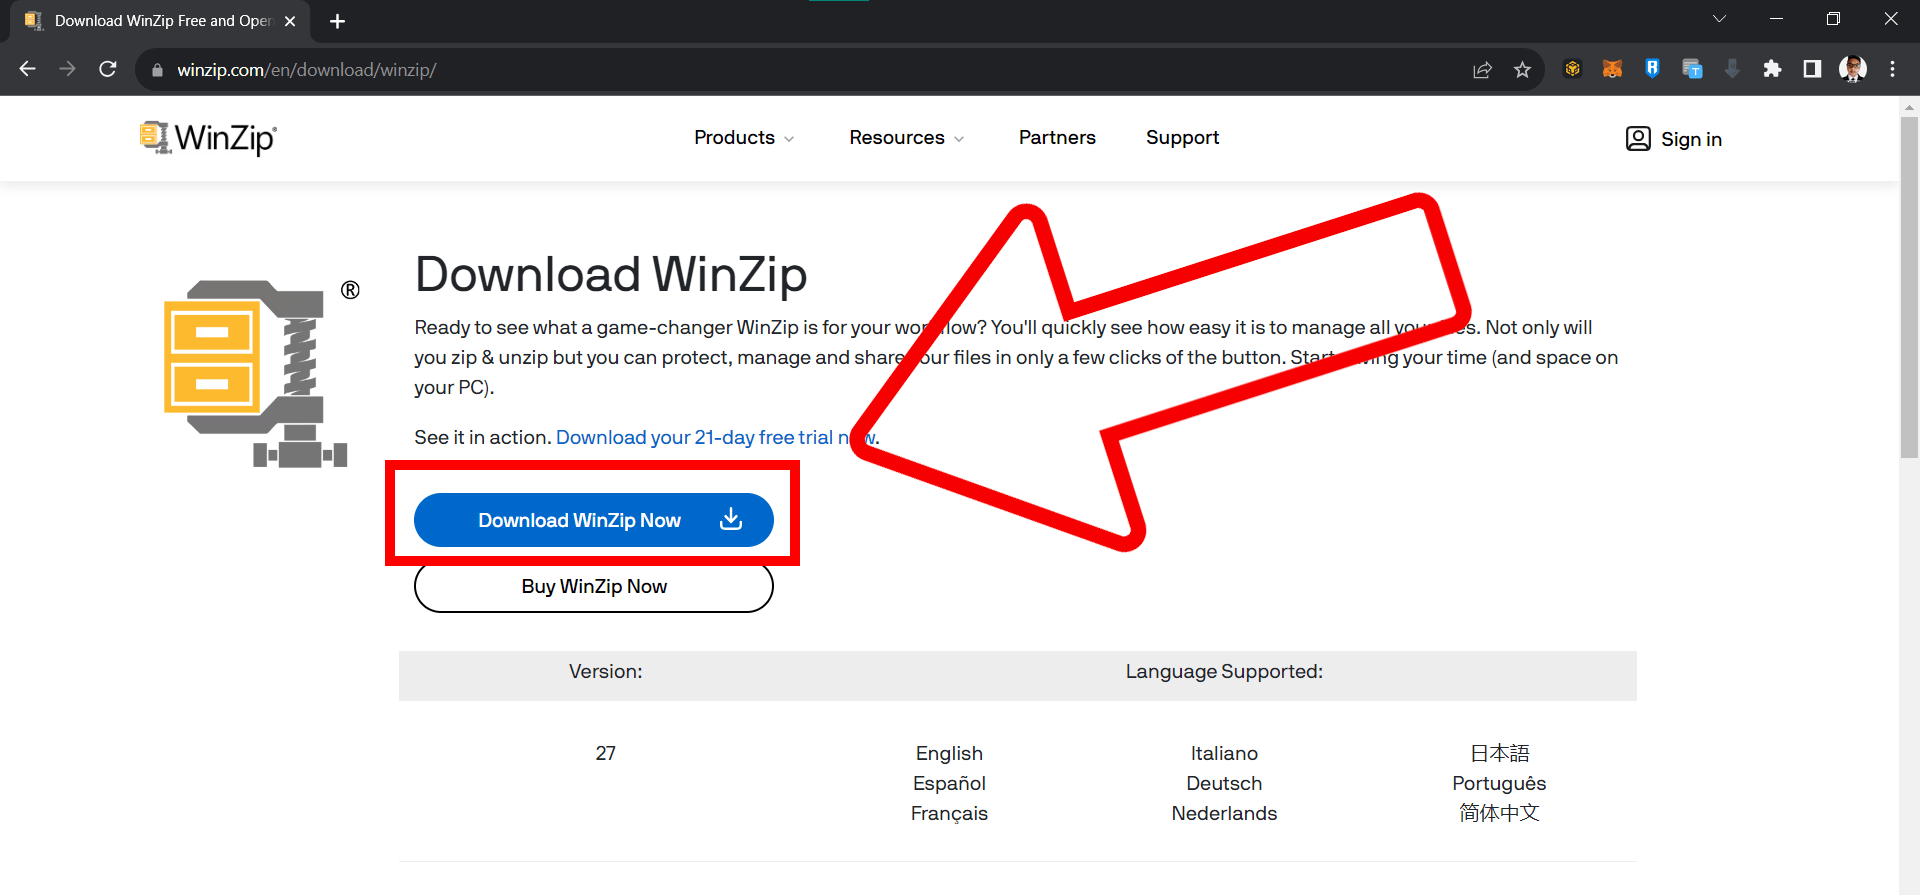 How To Open Multipart ZIP Files Using WinZip: Step 1